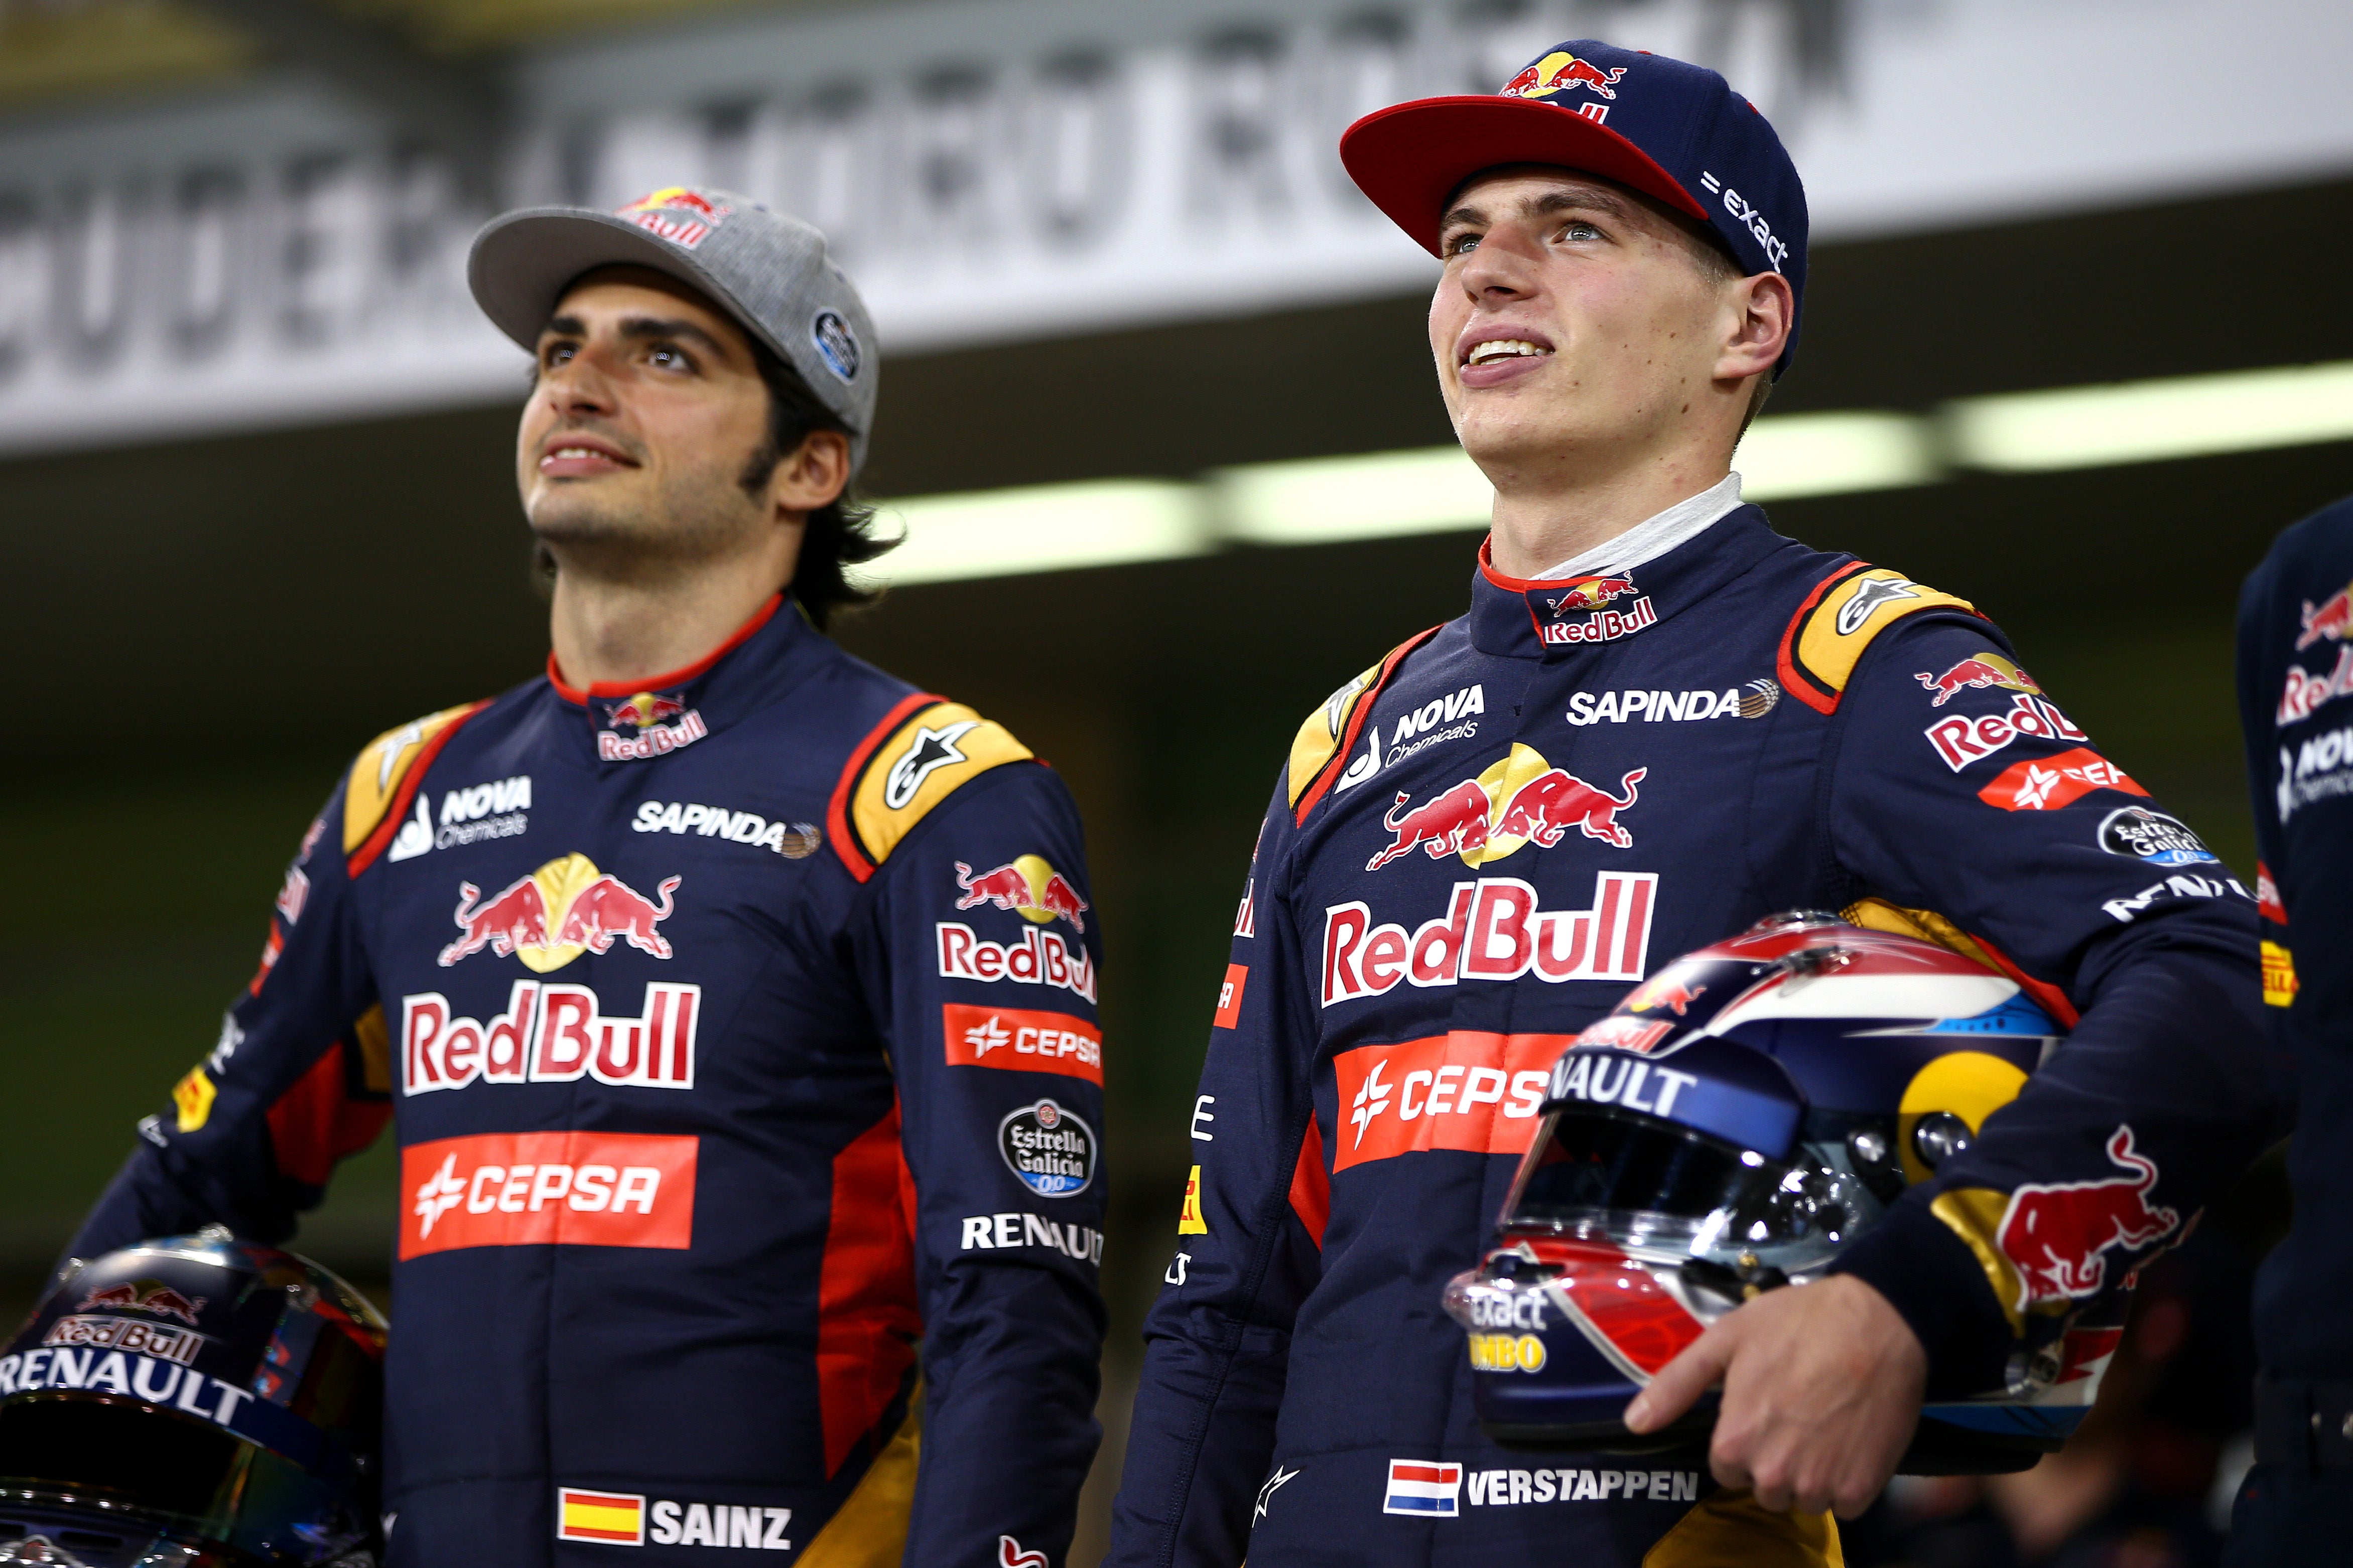 Sainz started his F1 career alongside Max Verstappen at Toro Rosso